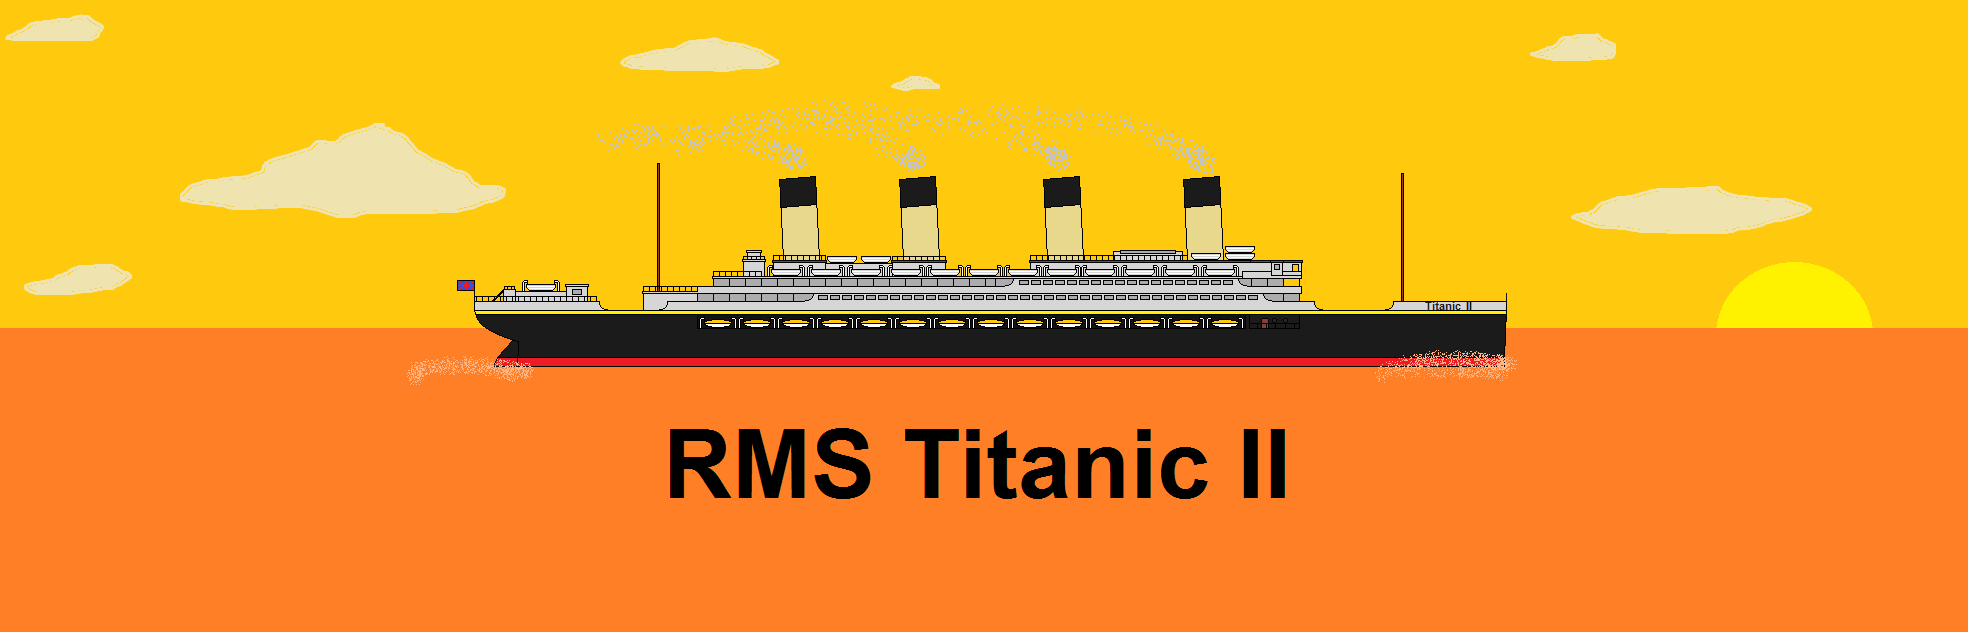 RMS Titanic II (Ver 2) by egeugiu on DeviantArt